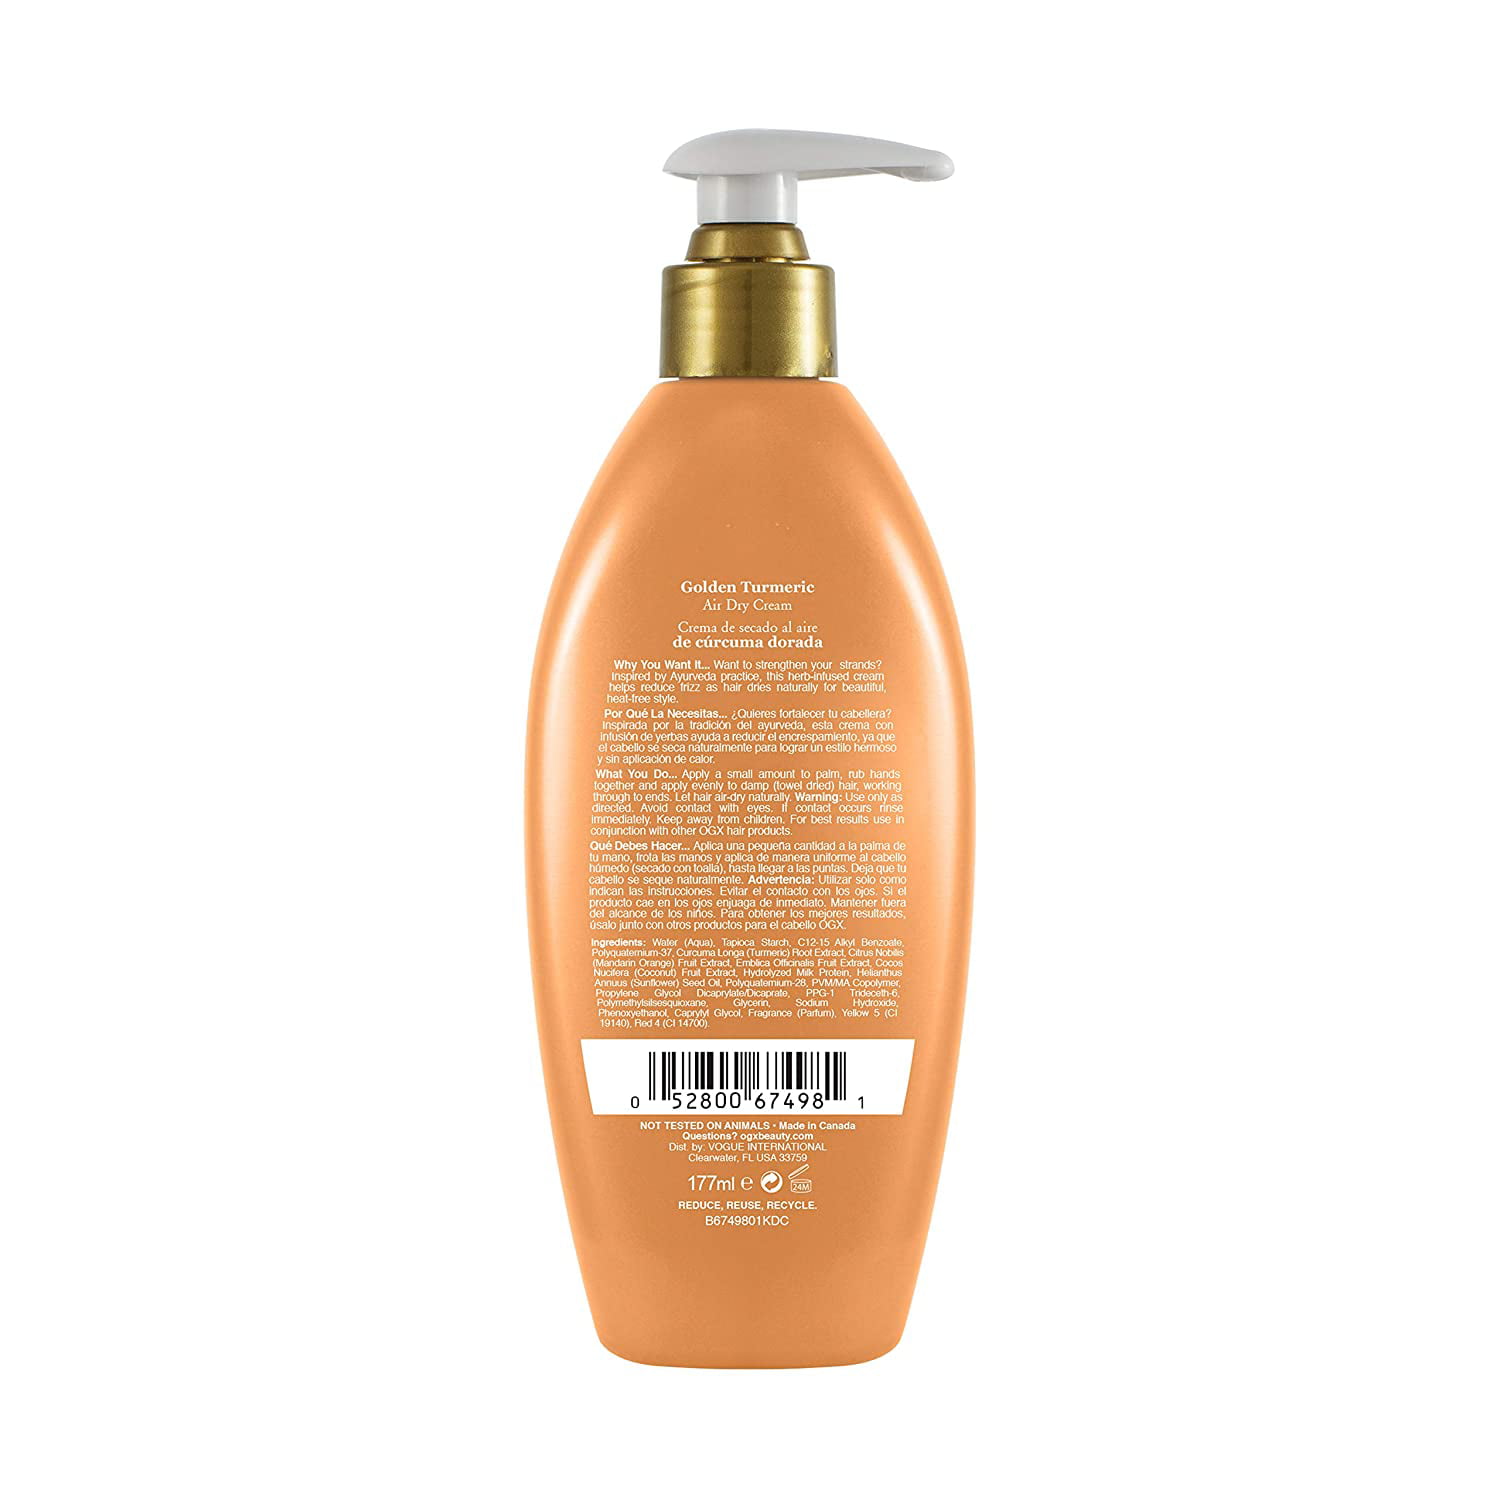 Ogx Strength & Length + Golden Turmeric Air Dry Hair Cream with Pump, 6 oz,  2 Pack 